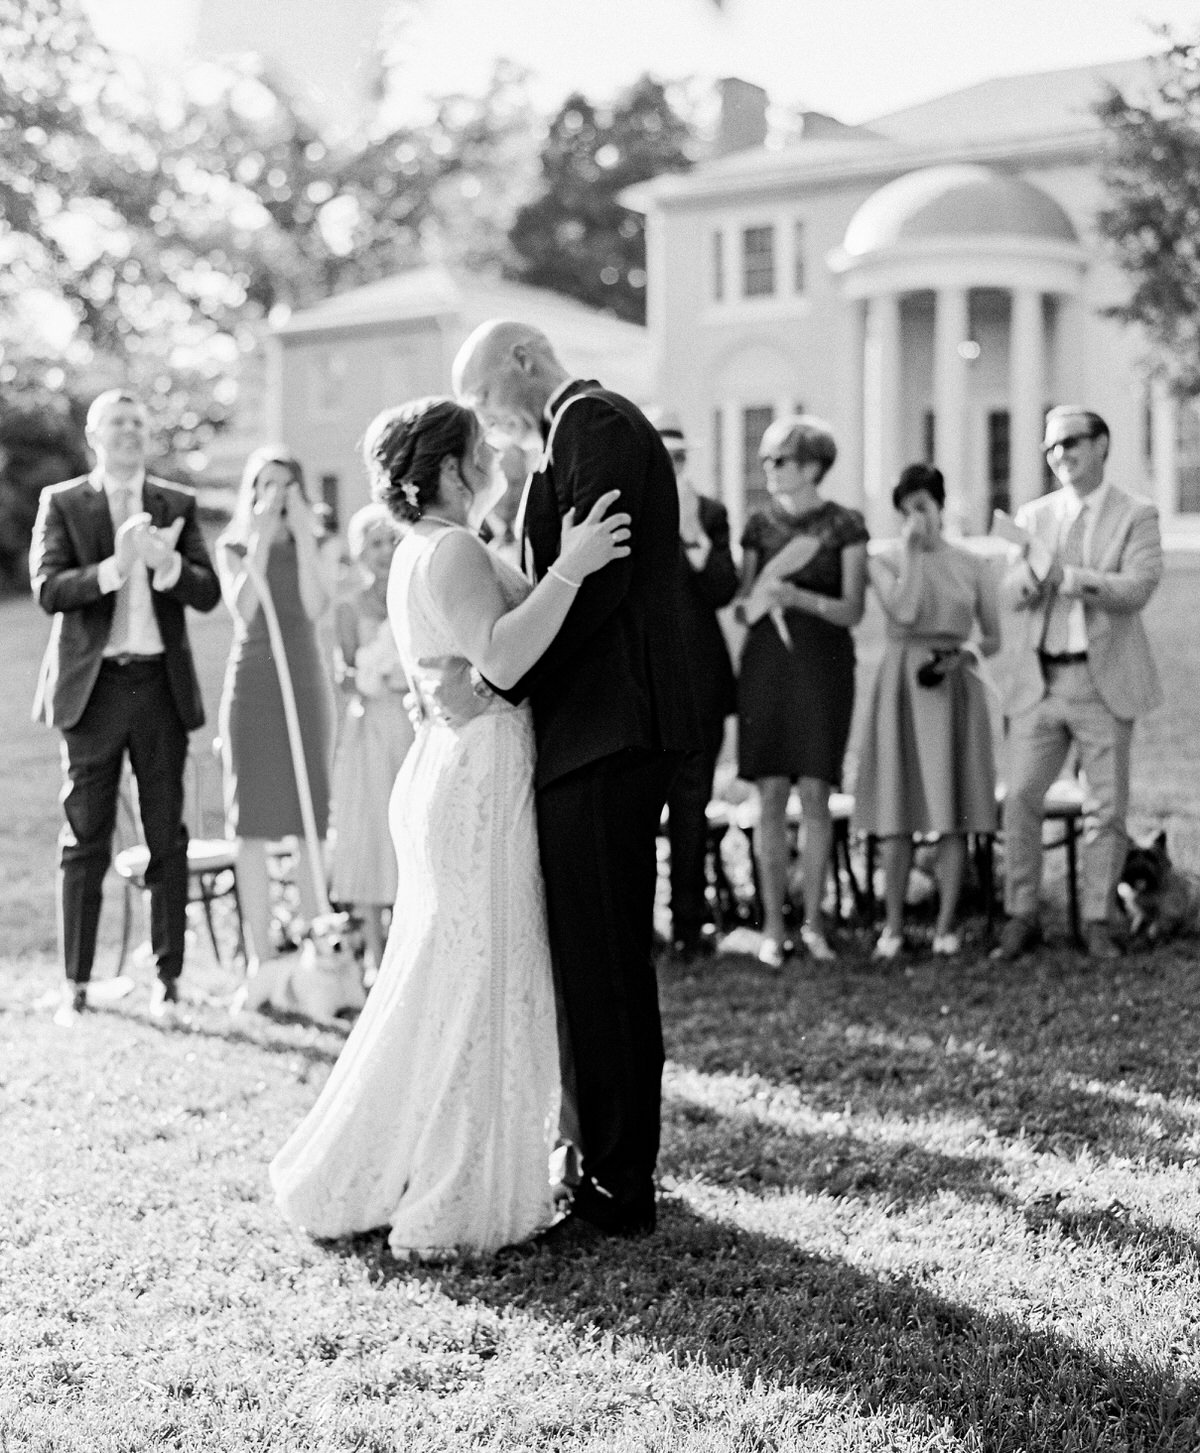 Washington DC film wedding photographer captures an intimate wedding at Tudor Place.